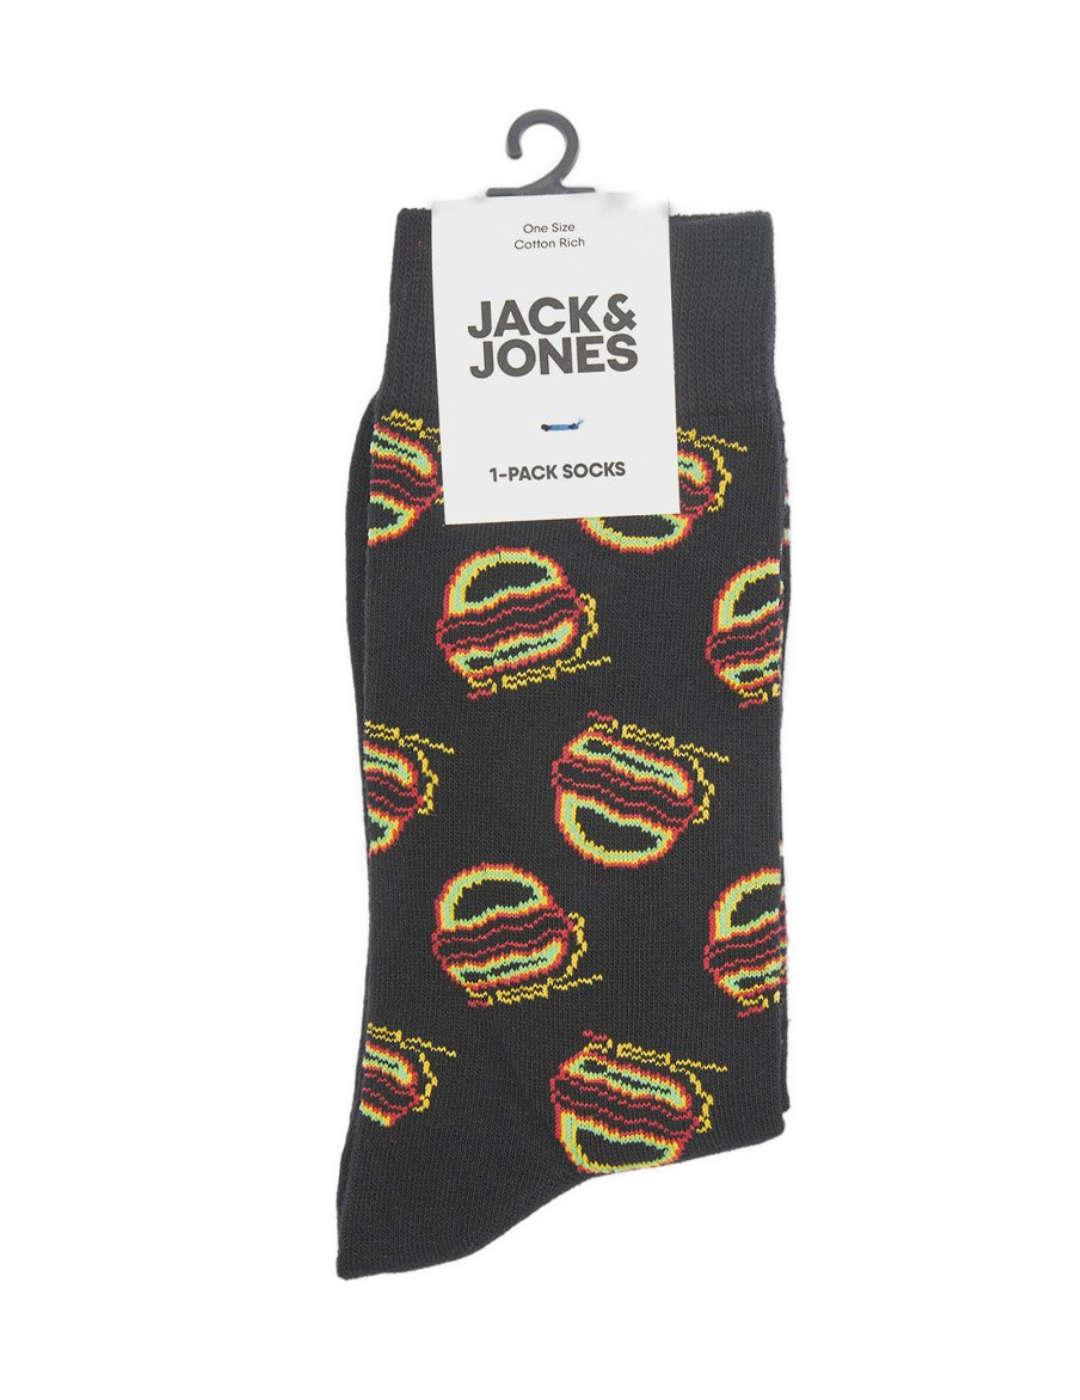 Calcetines Jack&Jones Fastfood negro altos con burgers